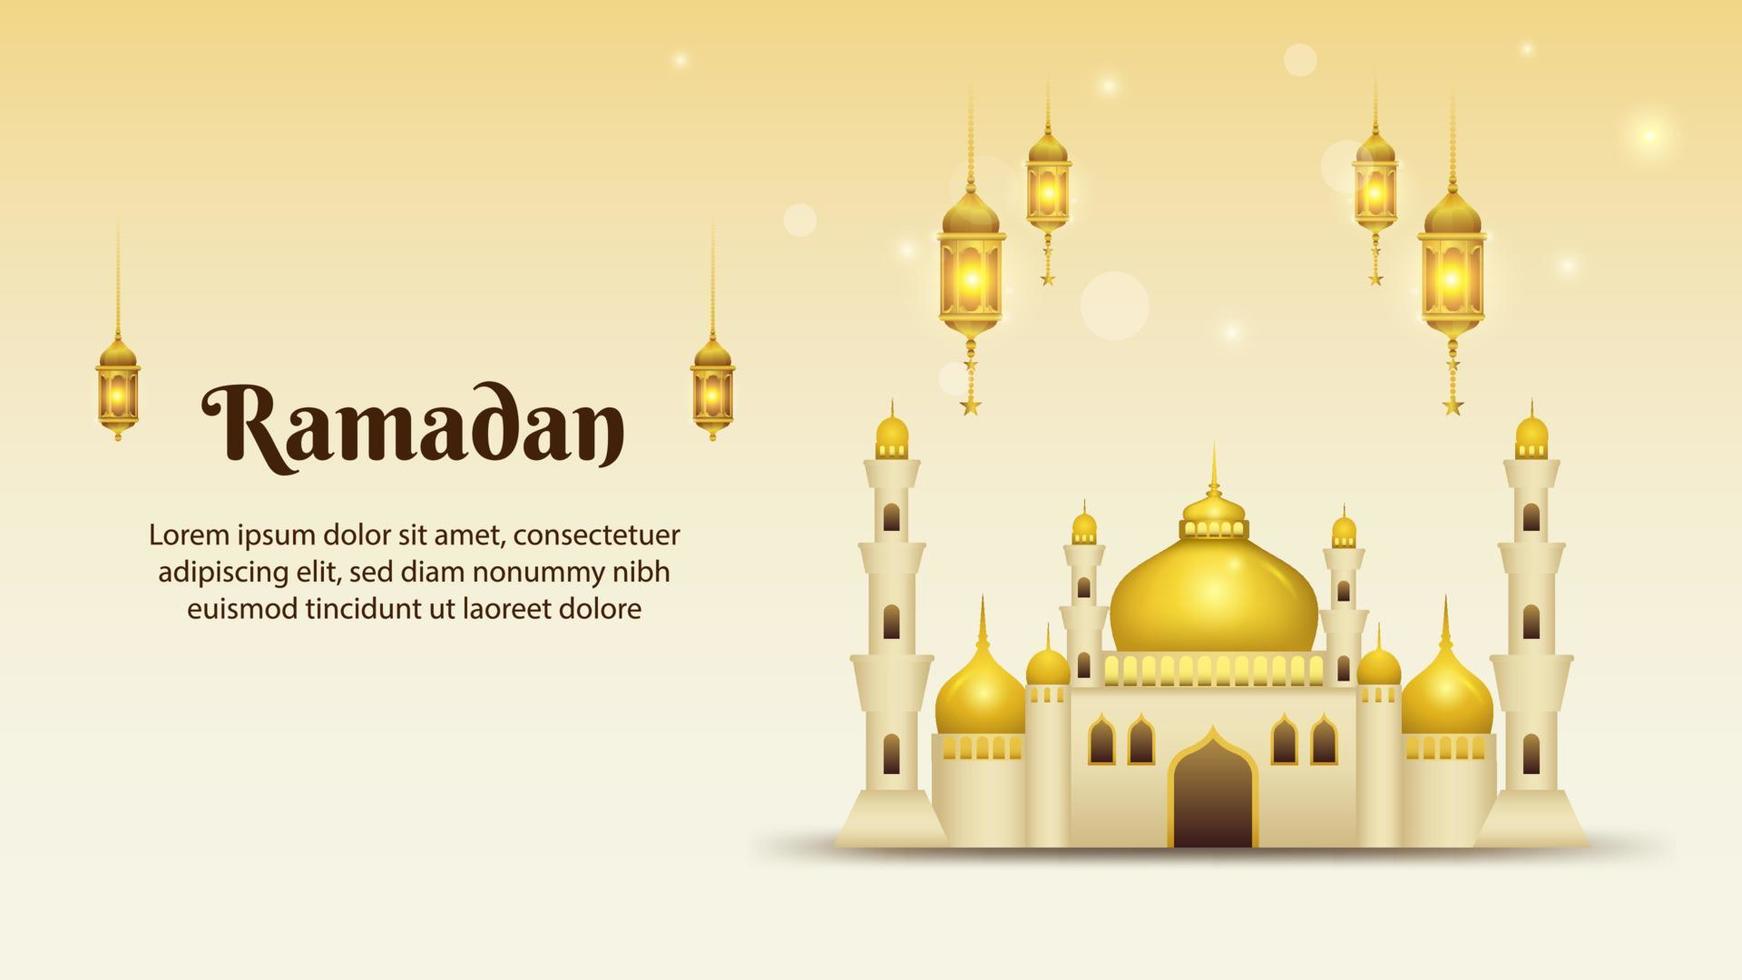 ramadan kareem background with mosque and hanging lanterns vector